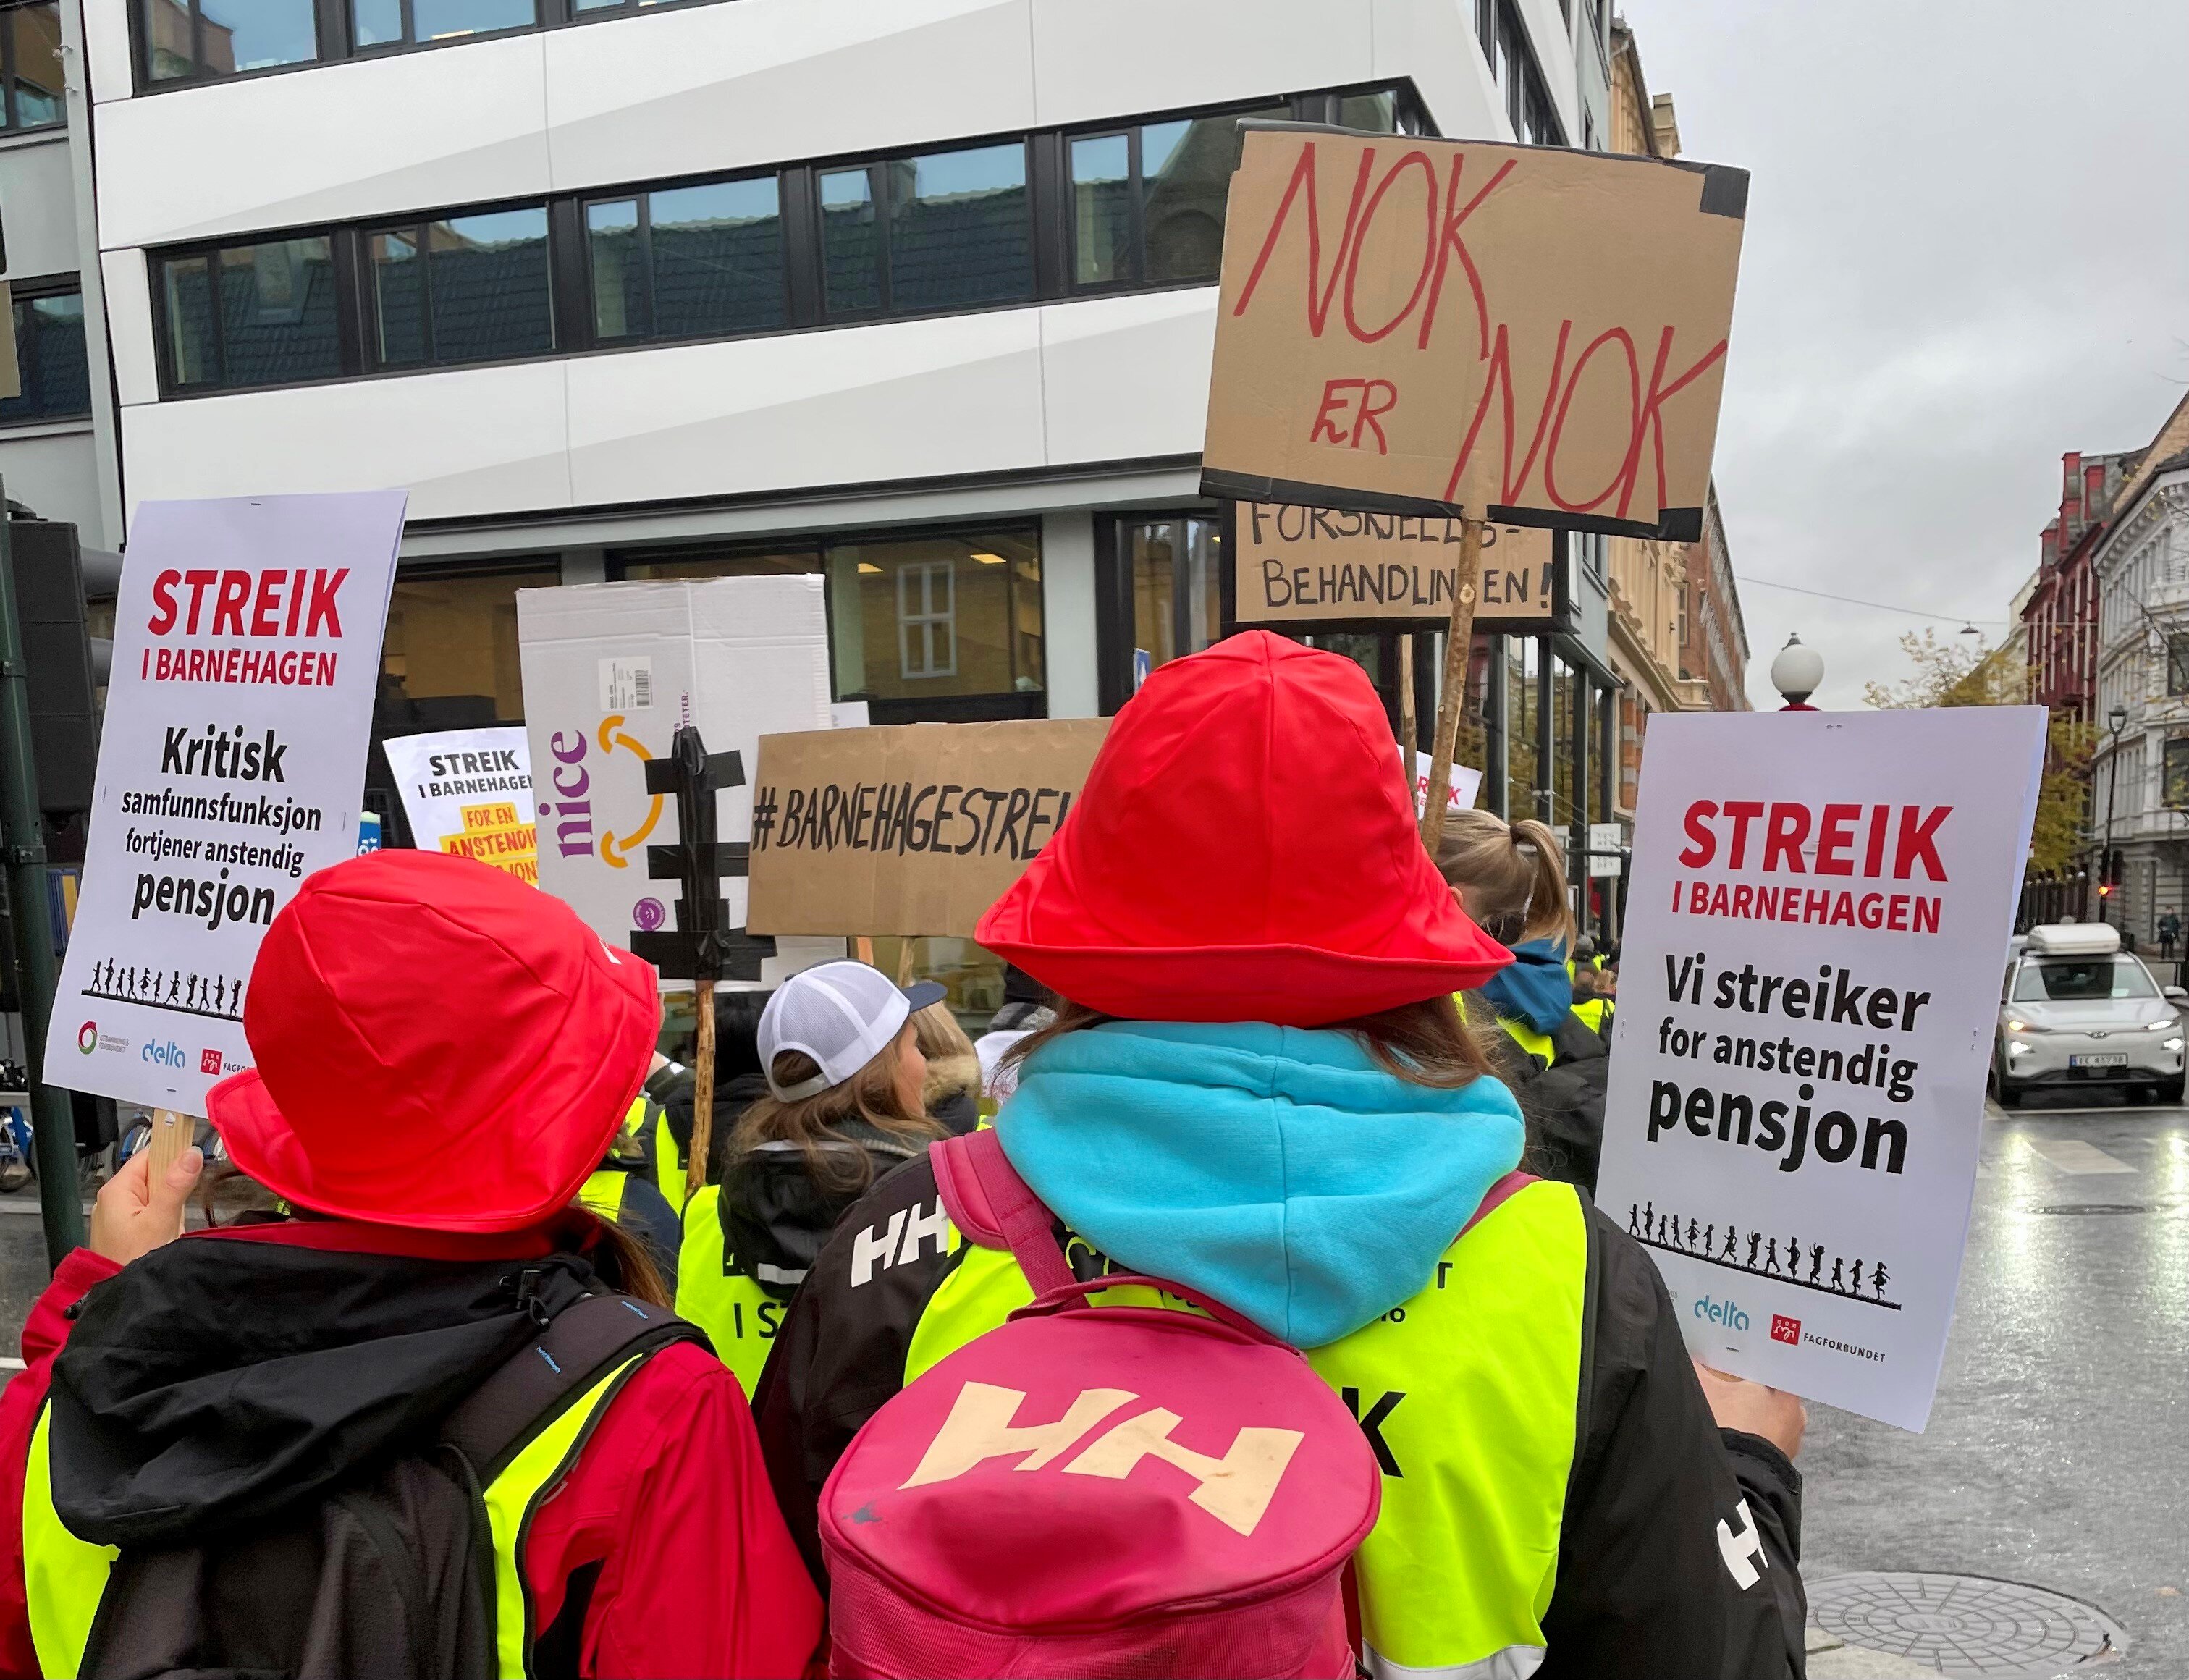 Streikemarkering i Oslo